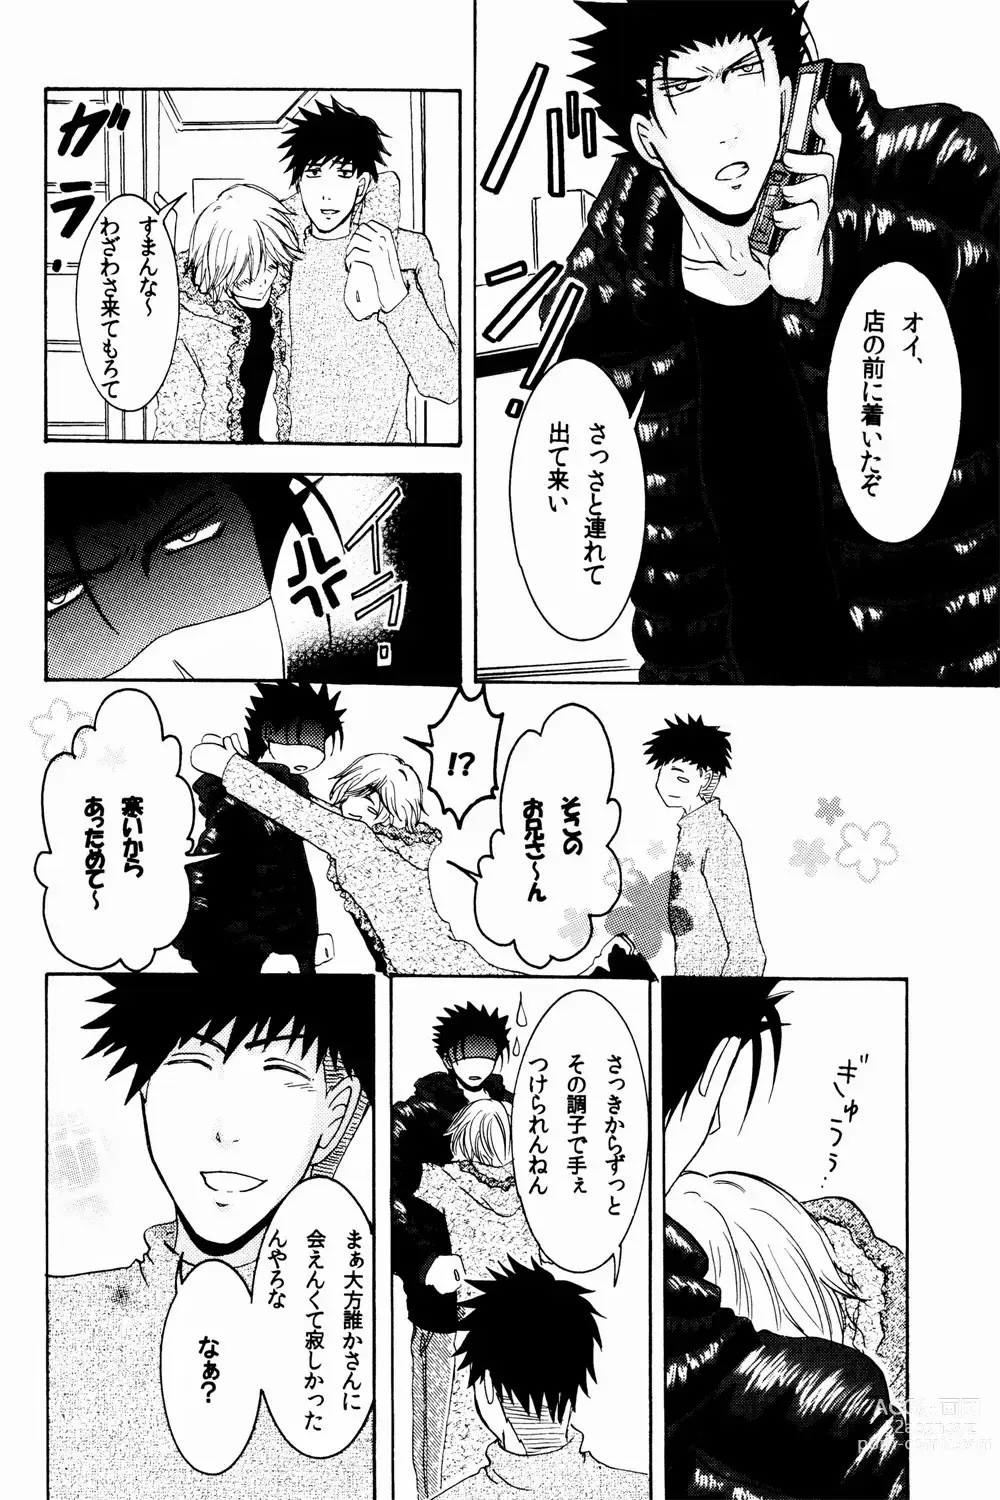 Page 11 of doujinshi New Year wa Kimi no Bed de.